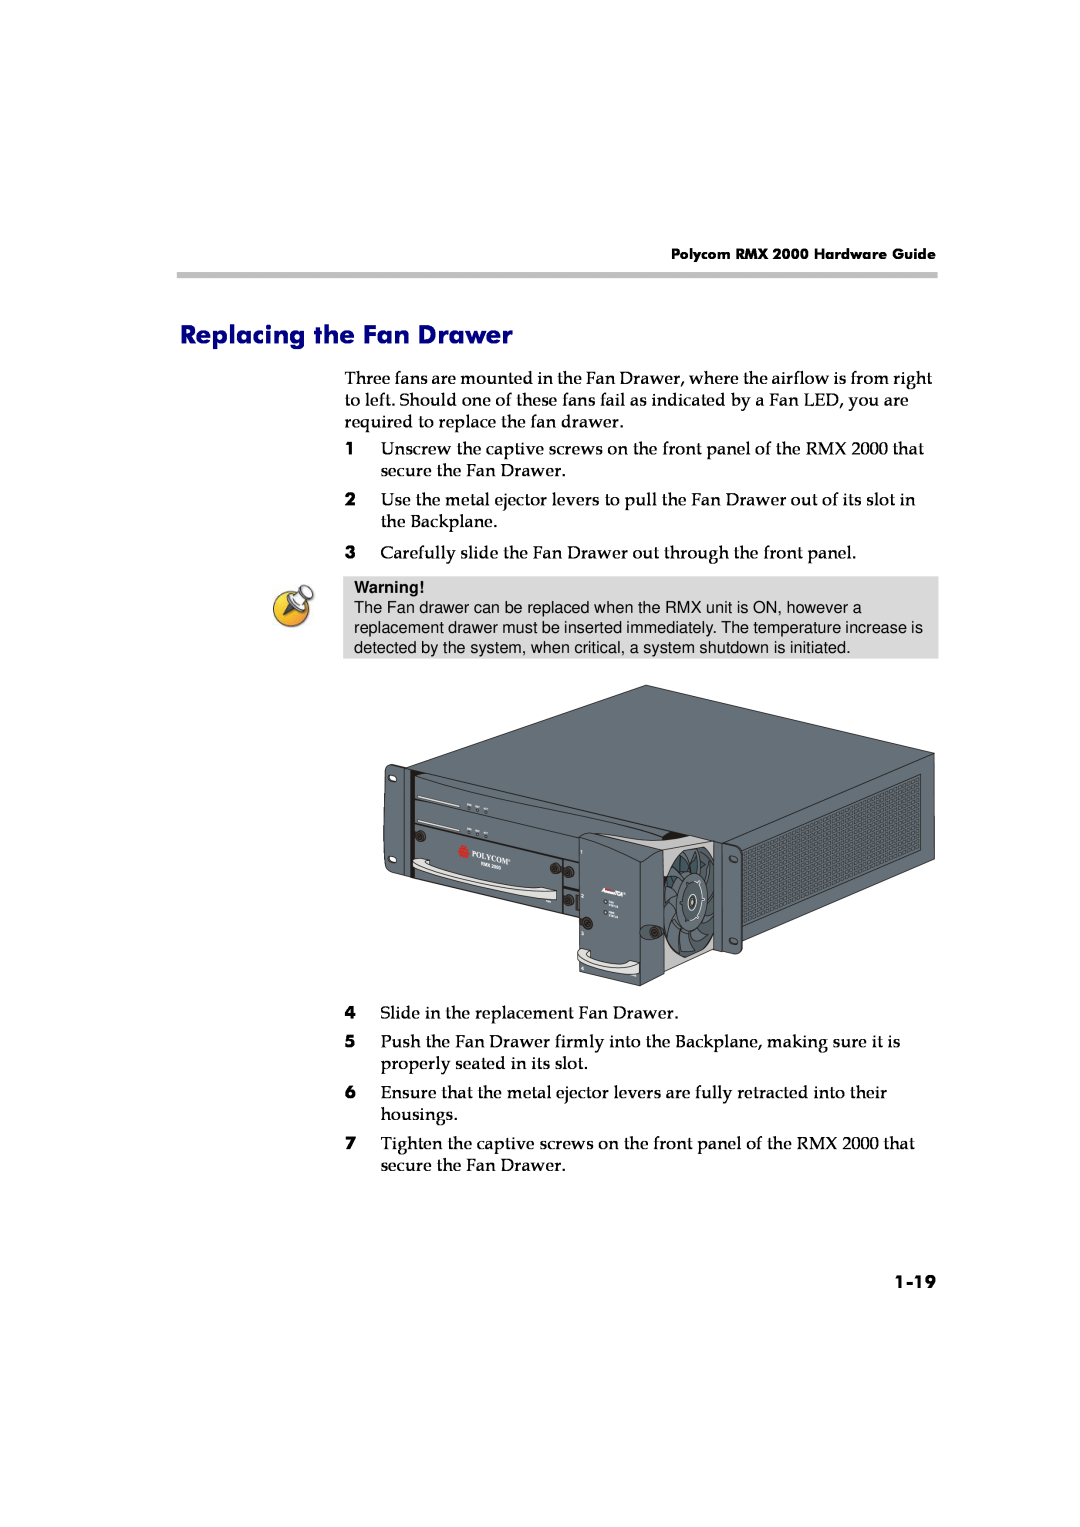 Polycom RMX 2000 manual Replacing the Fan Drawer, 1-19 